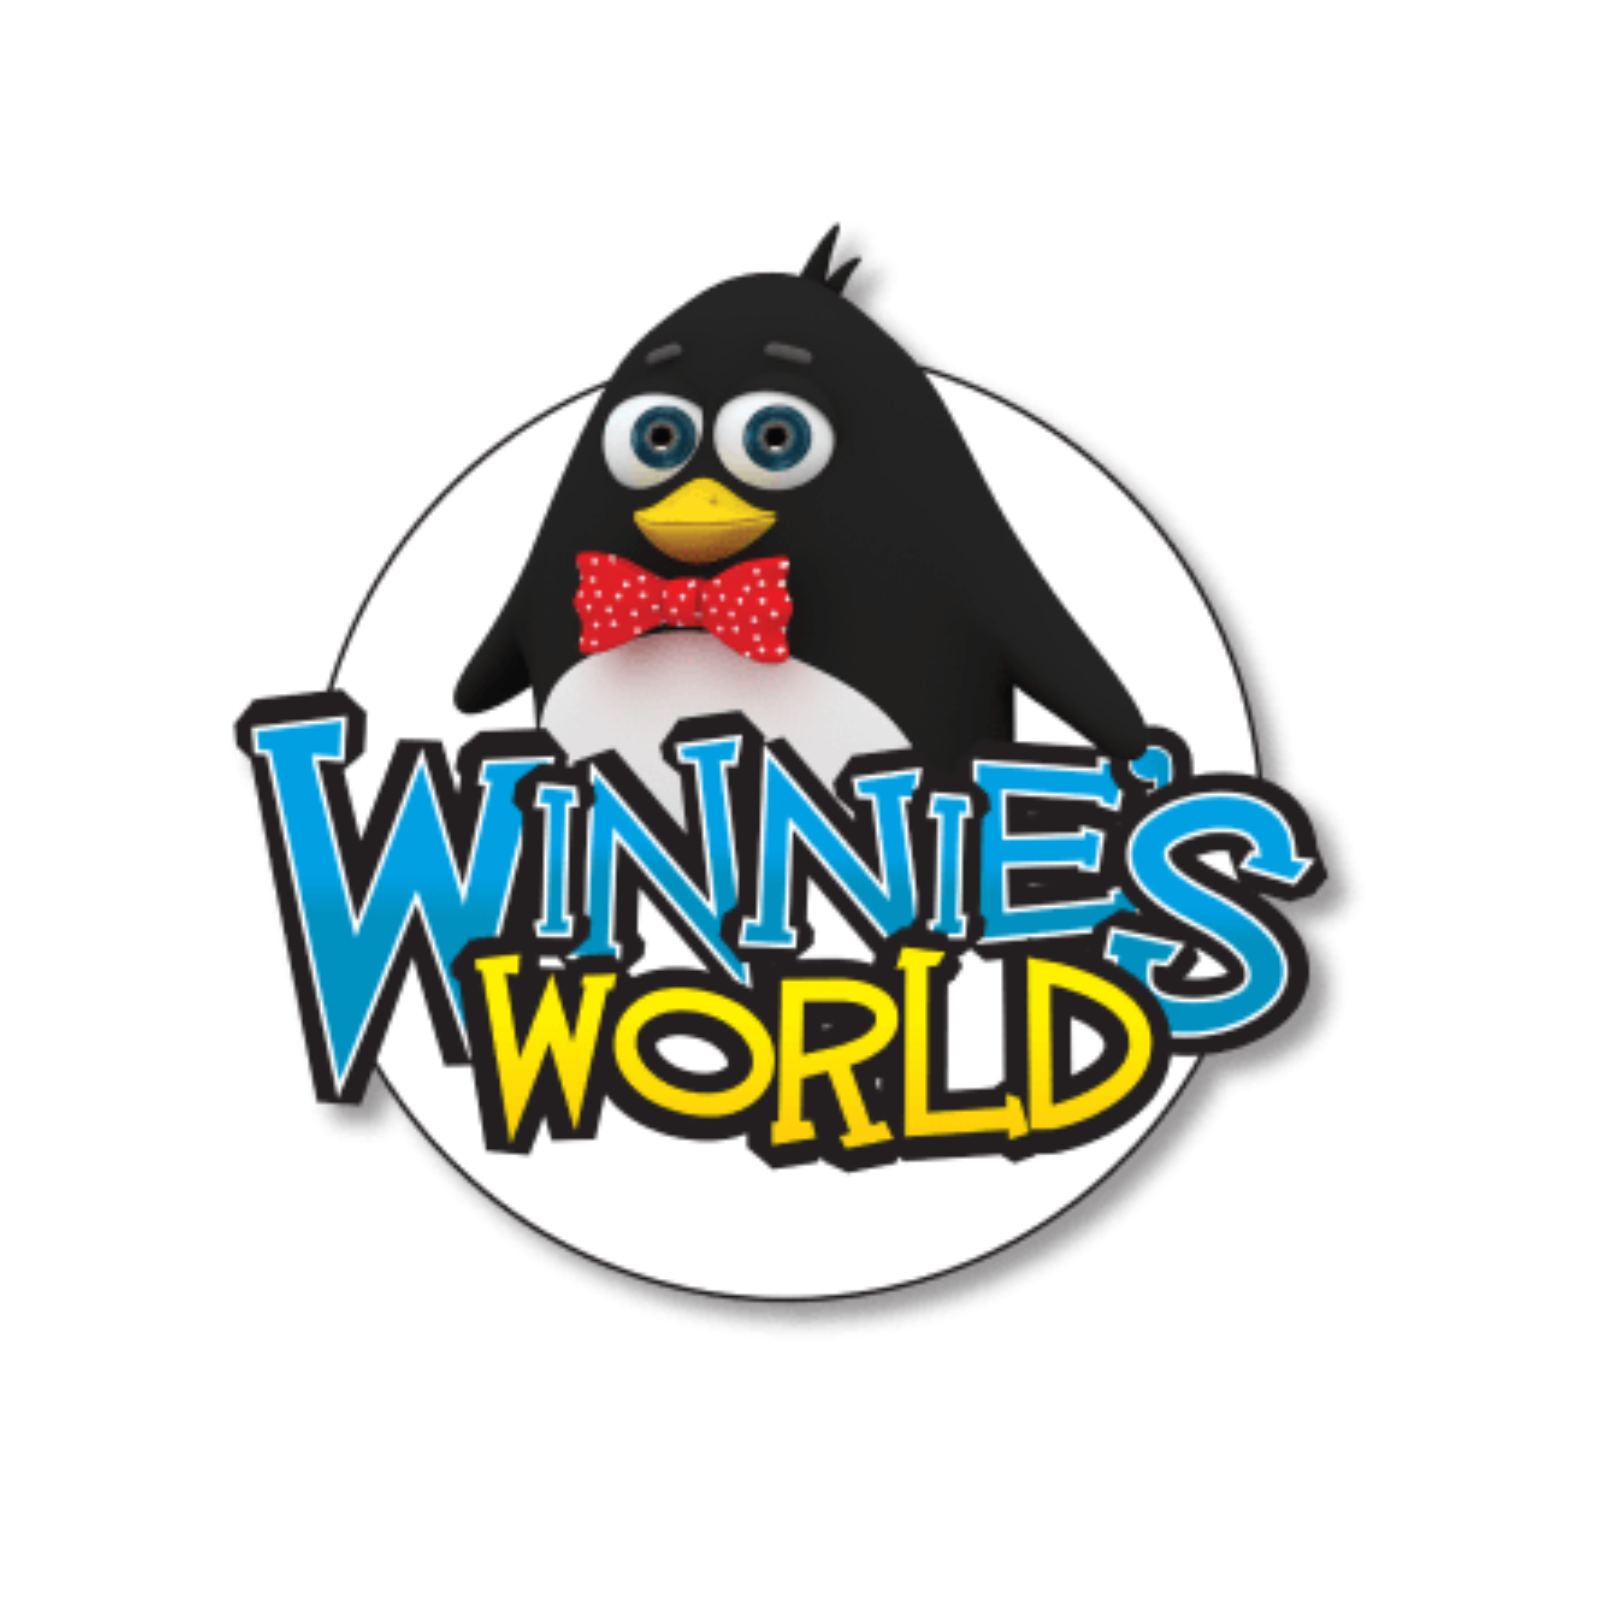 Winnies World course logo